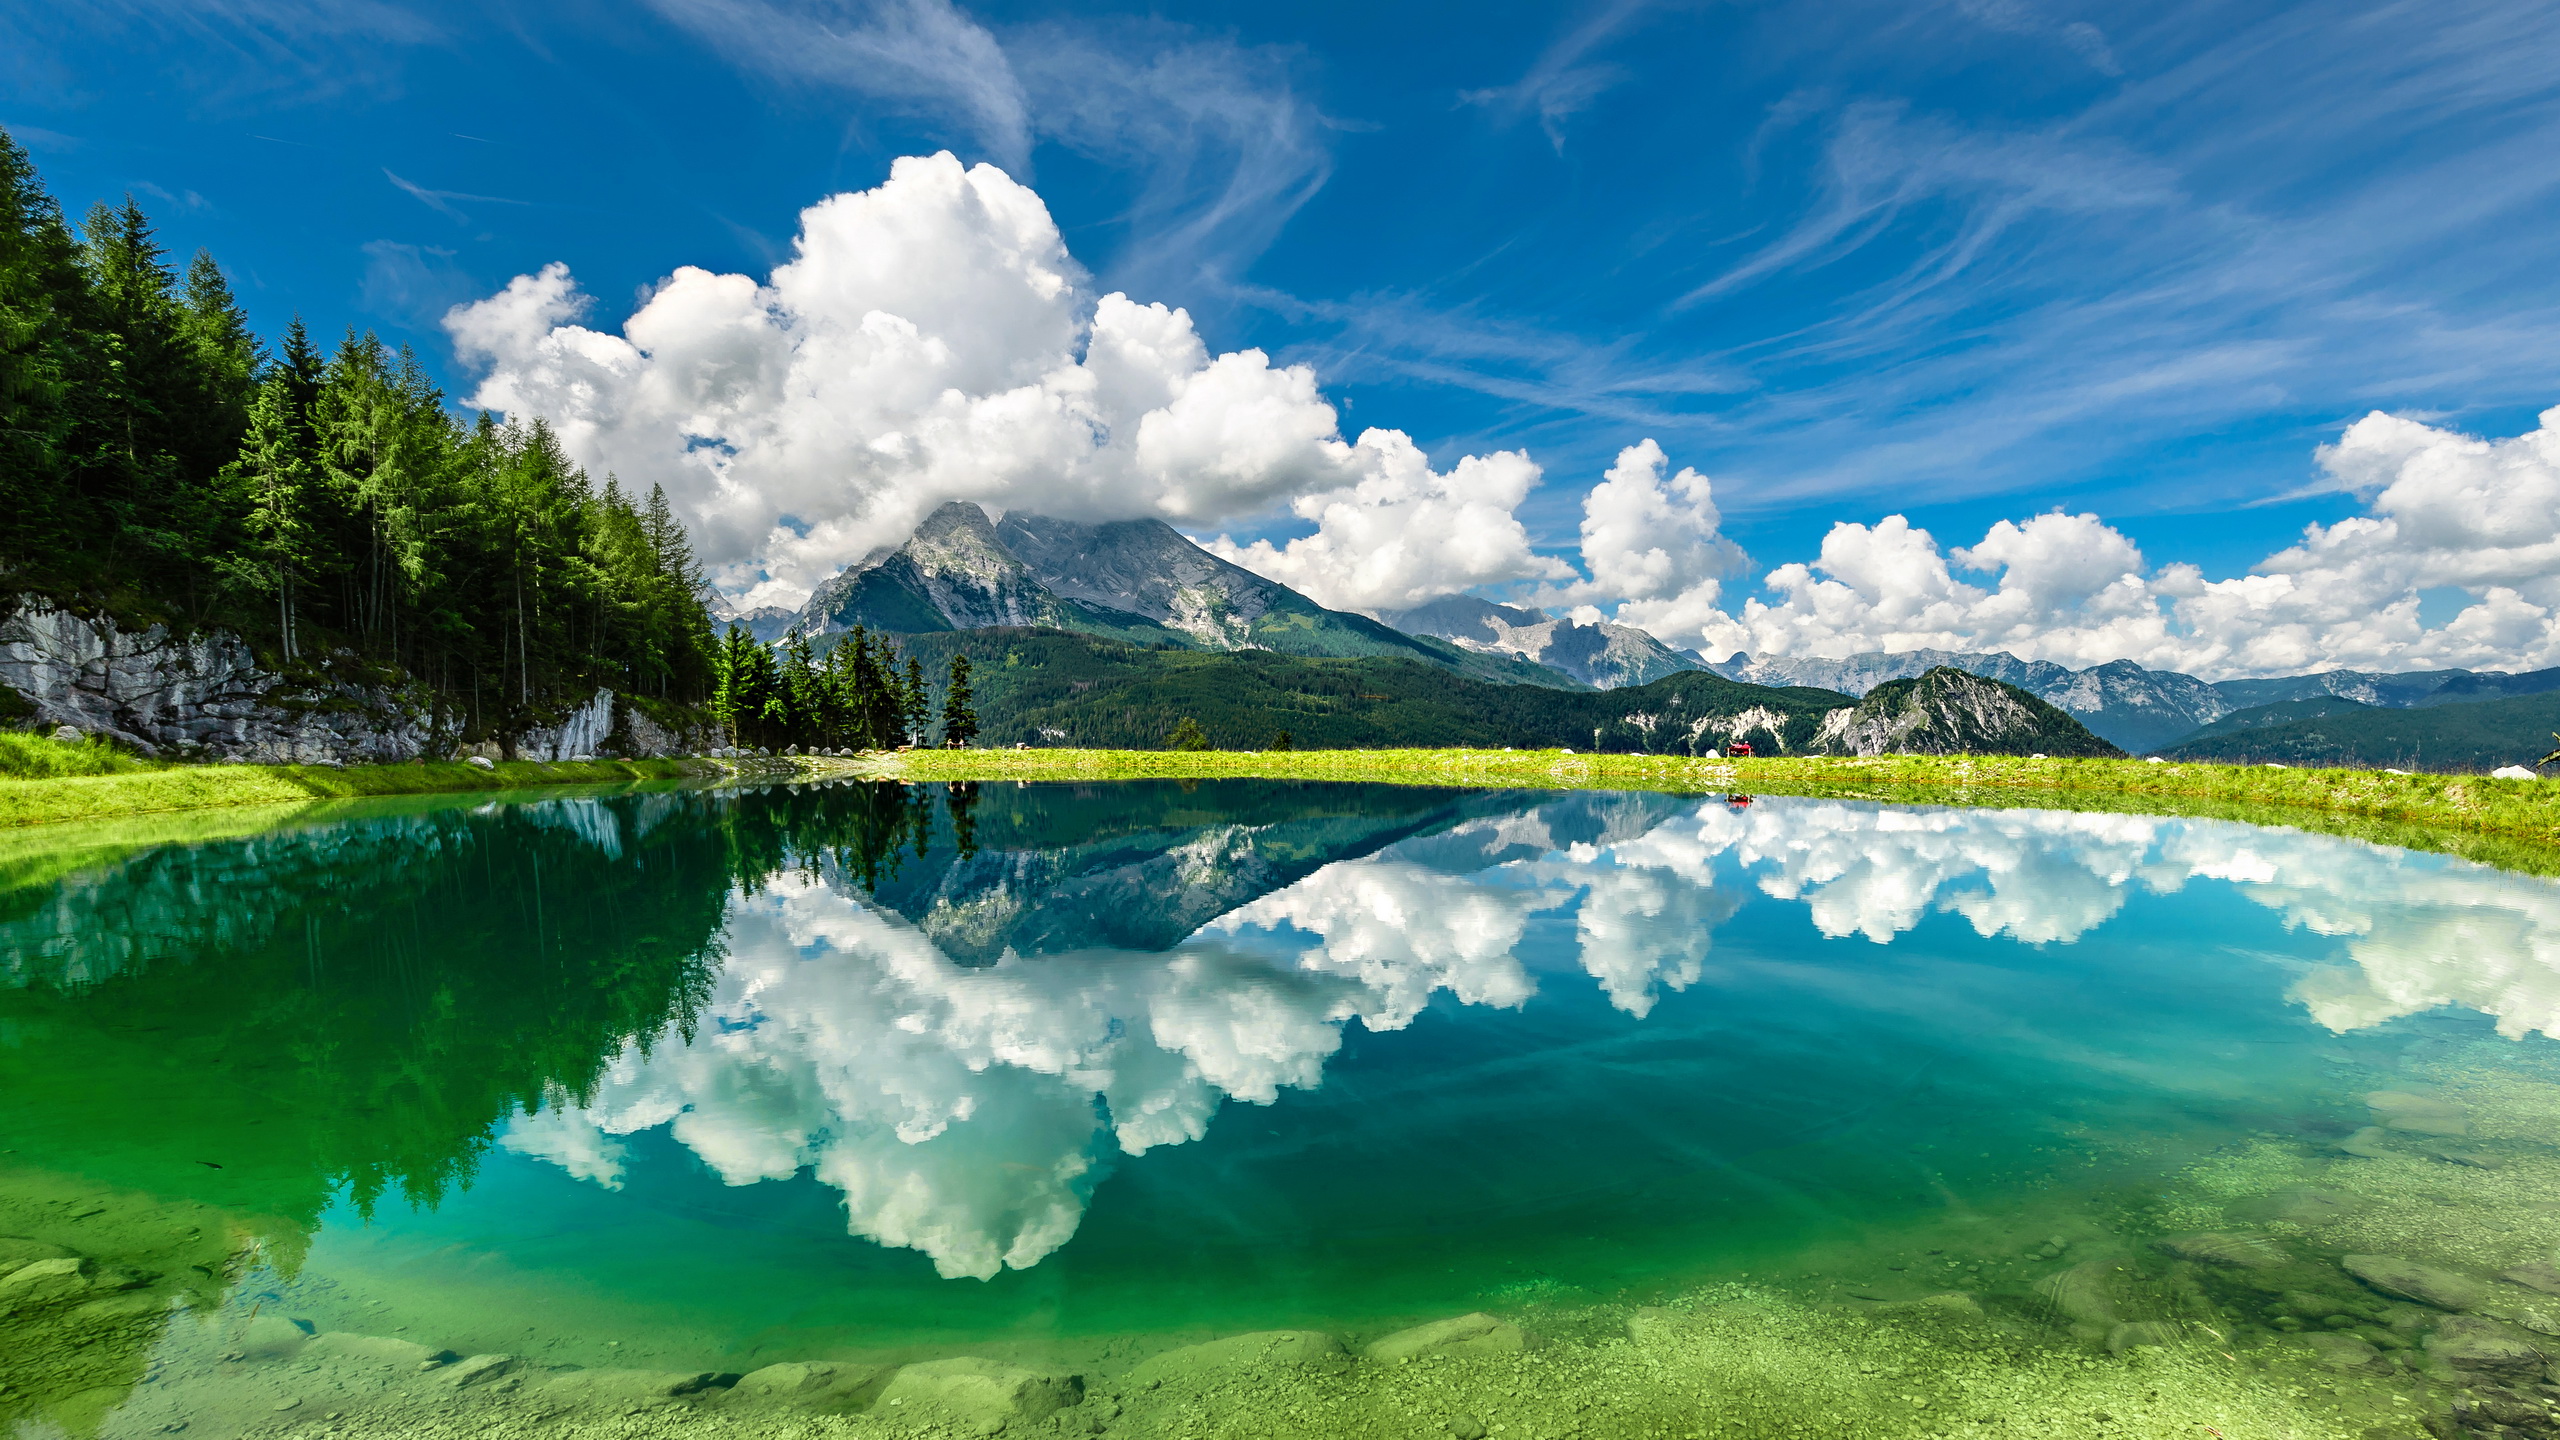 beautiful desktop wallpaper hd,sky,nature,natural landscape,reflection,water resources